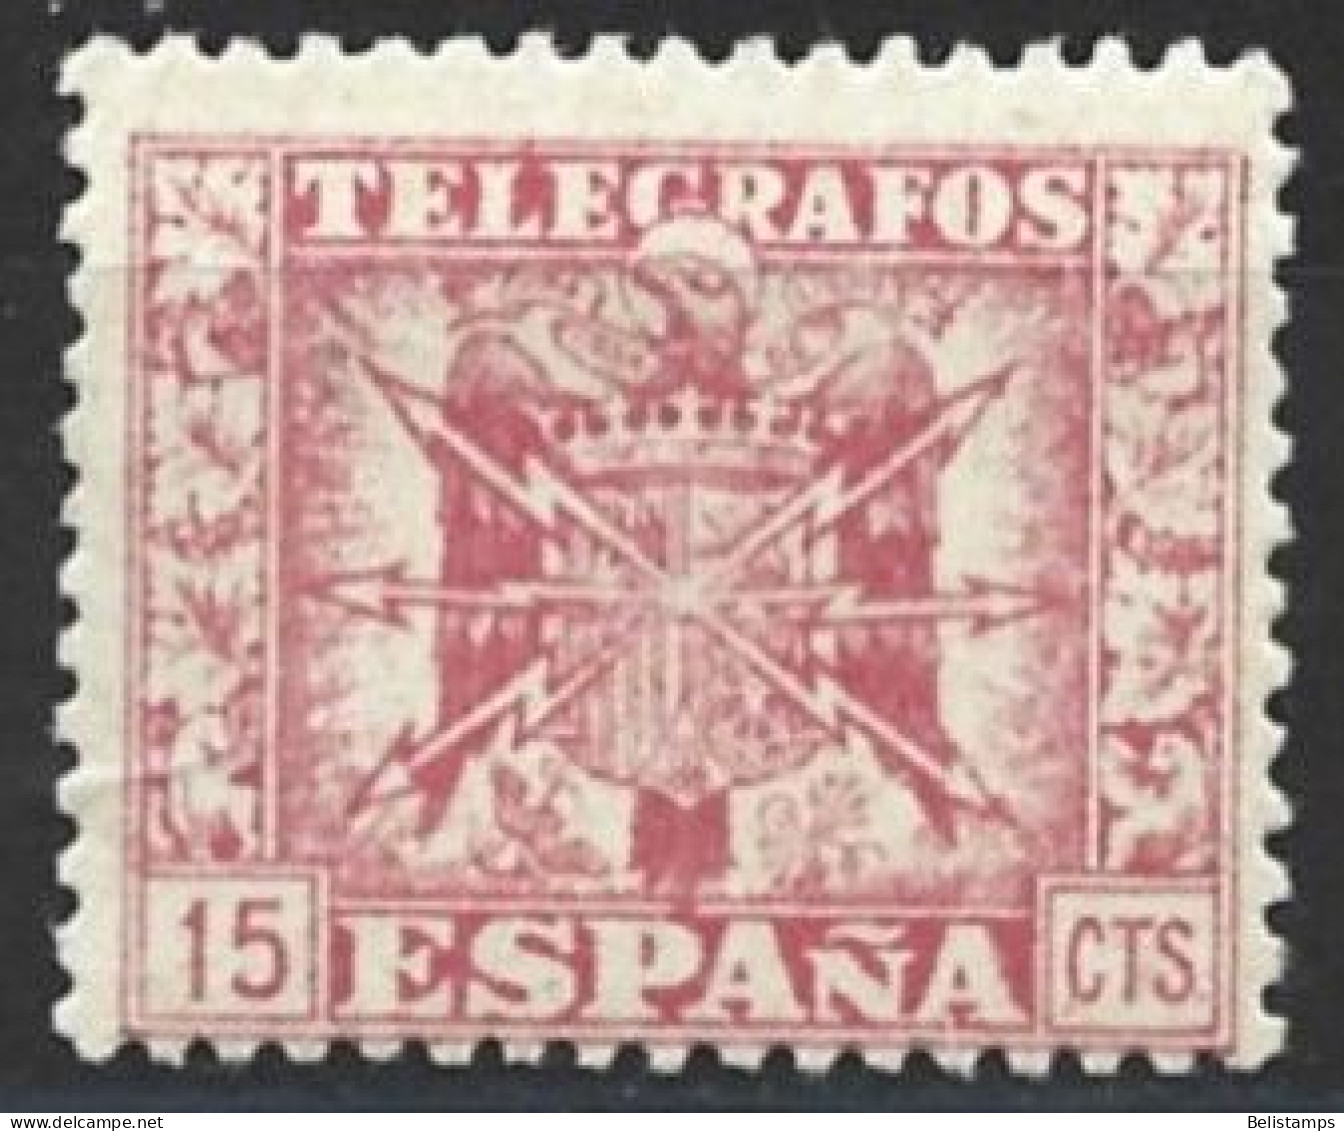 Spain. #Tel014 (MH) Telegraph Stamps - Telegraph